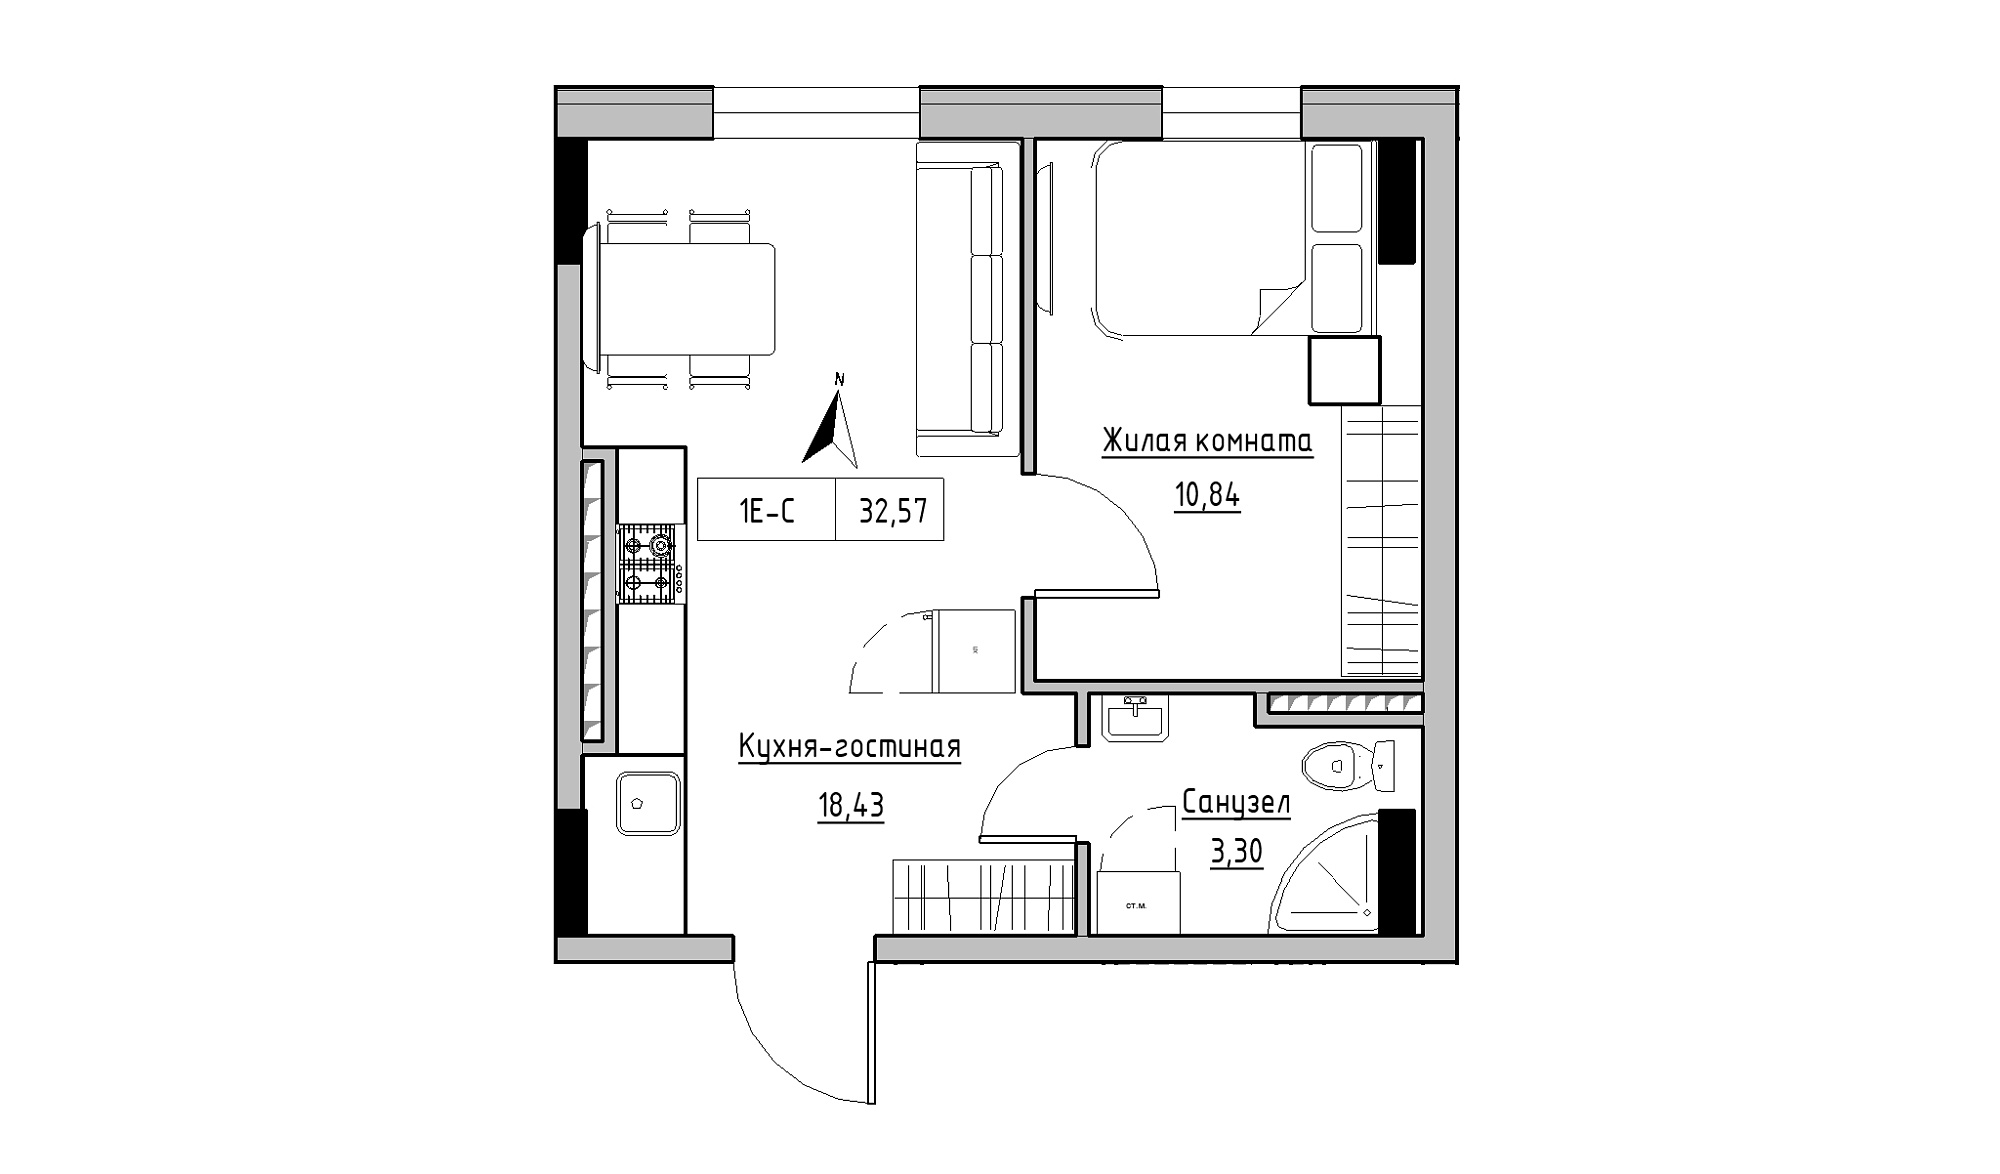 Planning 1-rm flats area 32.57m2, KS-025-06/0011.